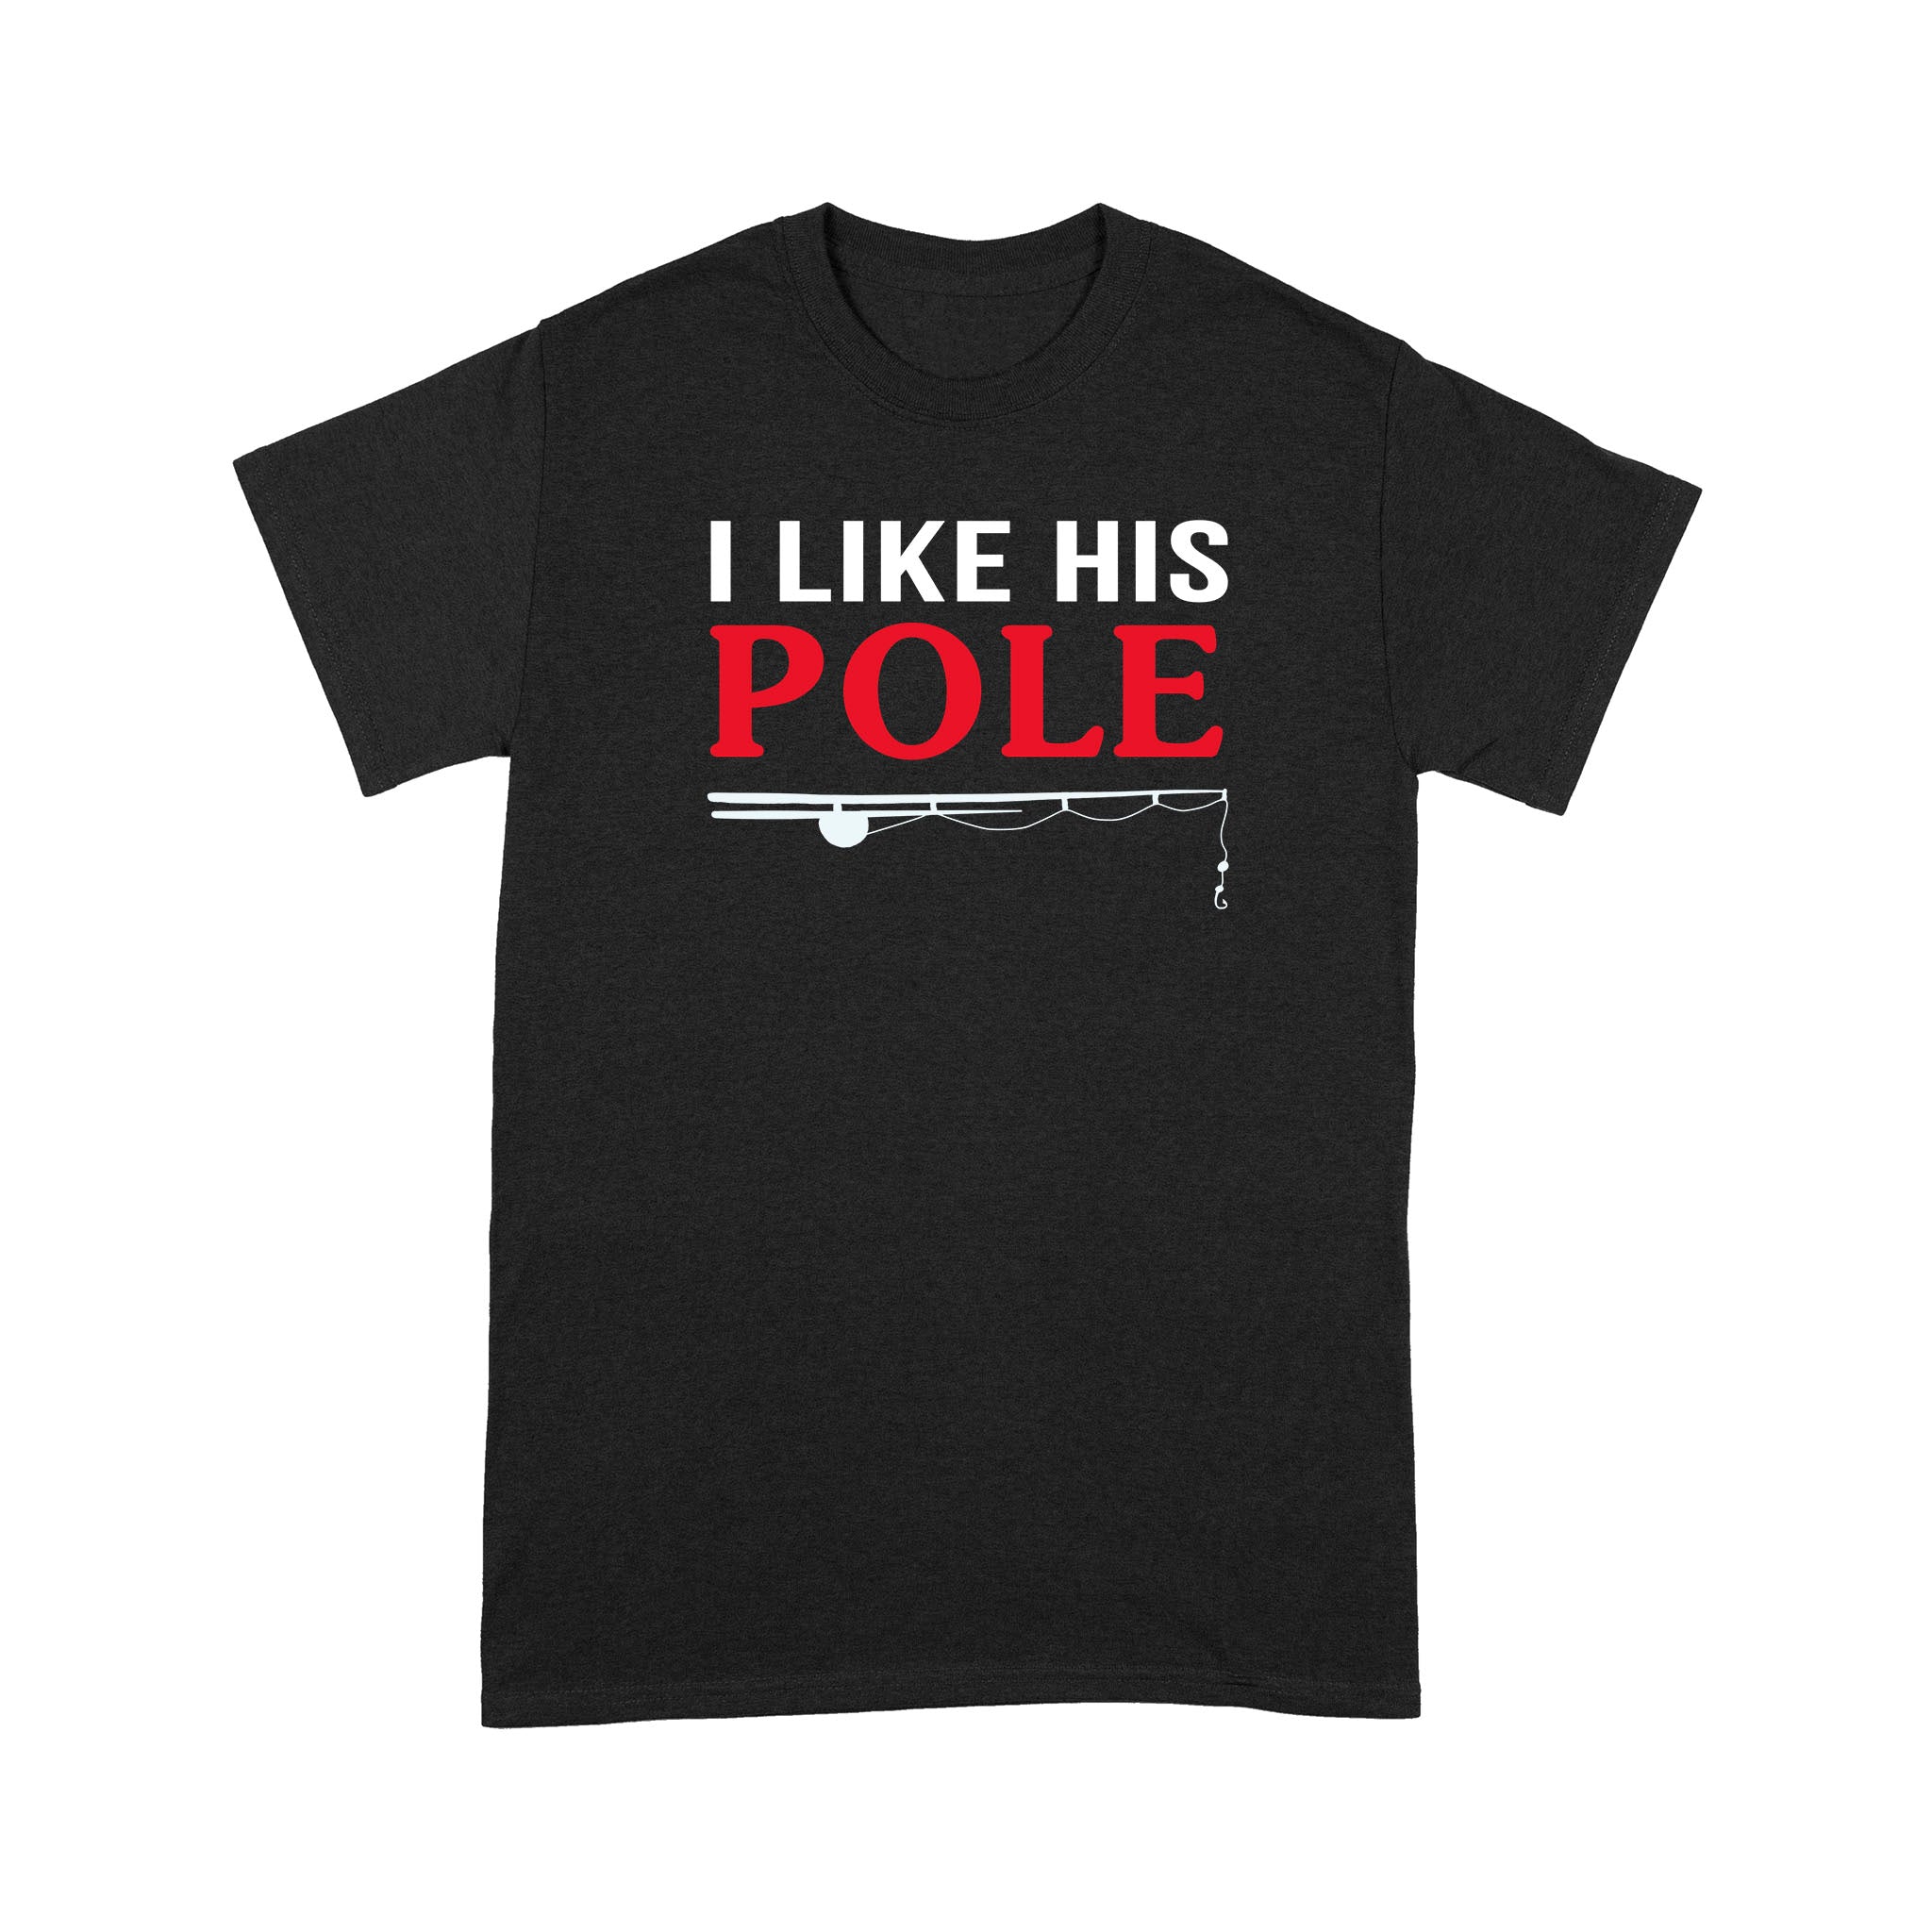 Funny Couple Shirt, I Like His Pole, I Like Her Bobbers, His & Hers, Matching Shirts, Cute Couple Shirts, Fishing Shirts, Unisex. – Standard T-shirt